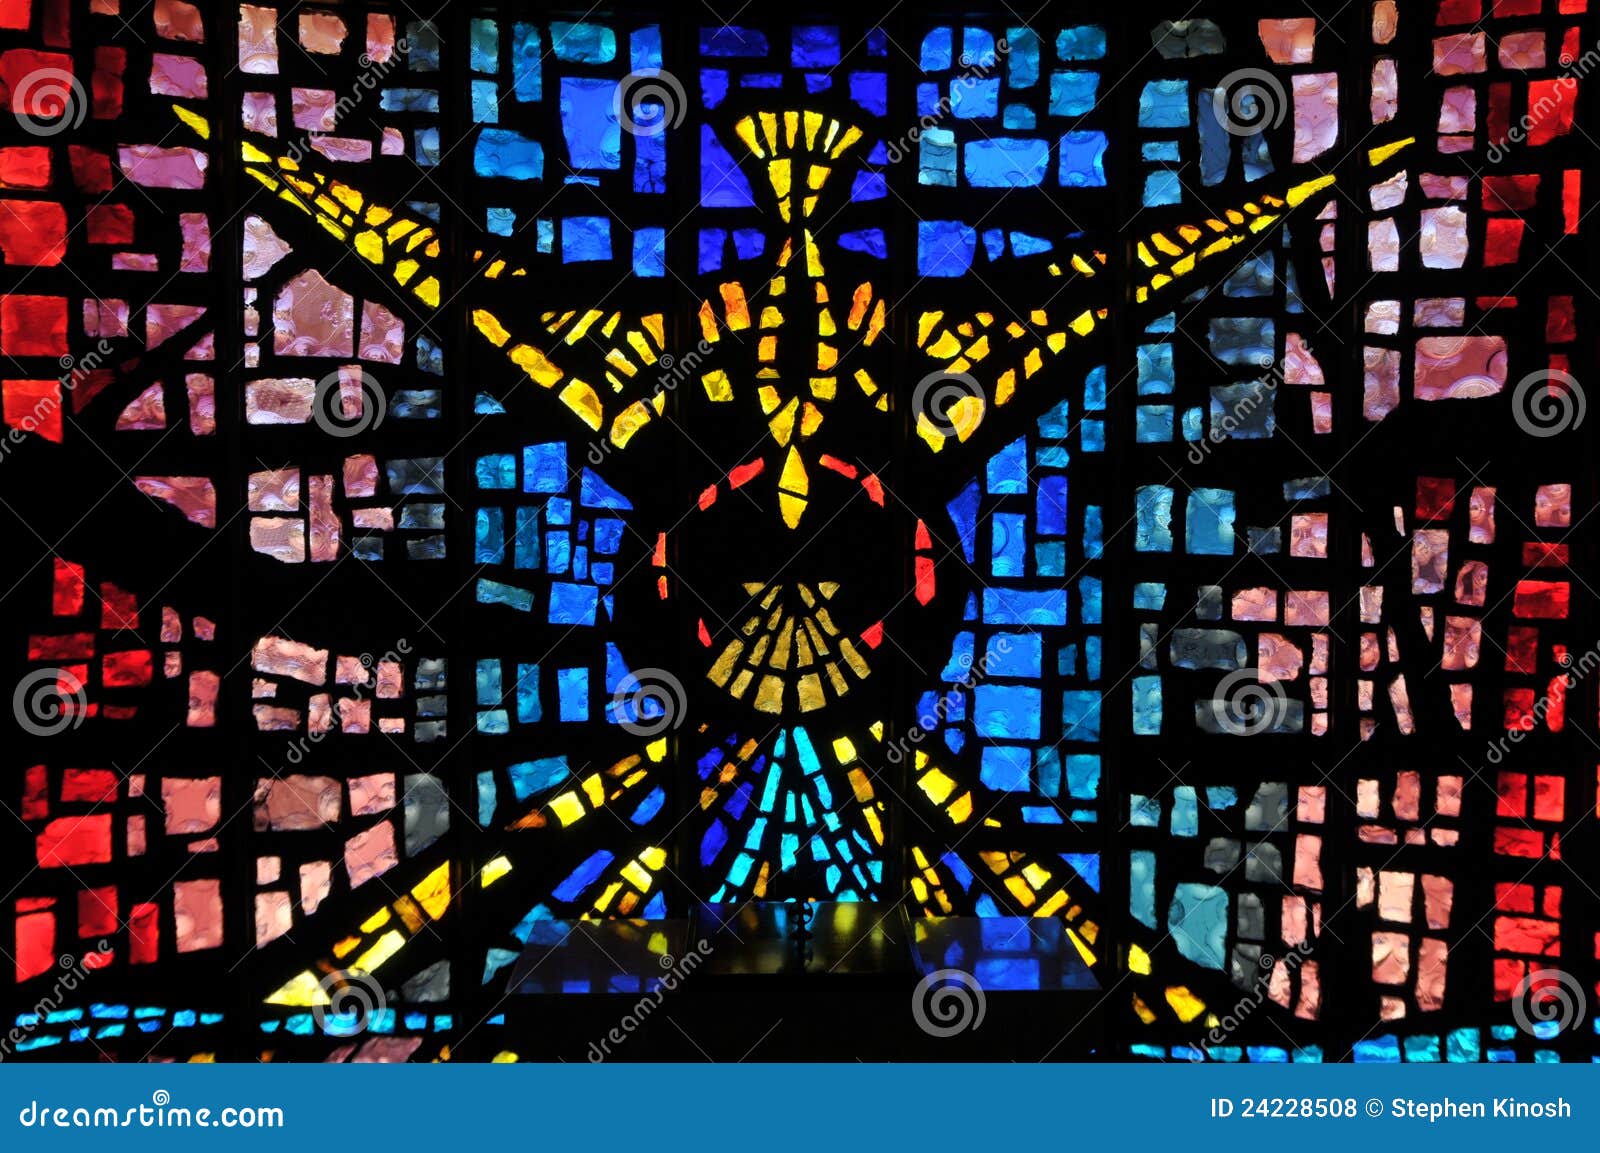 holy spirit staing glass window